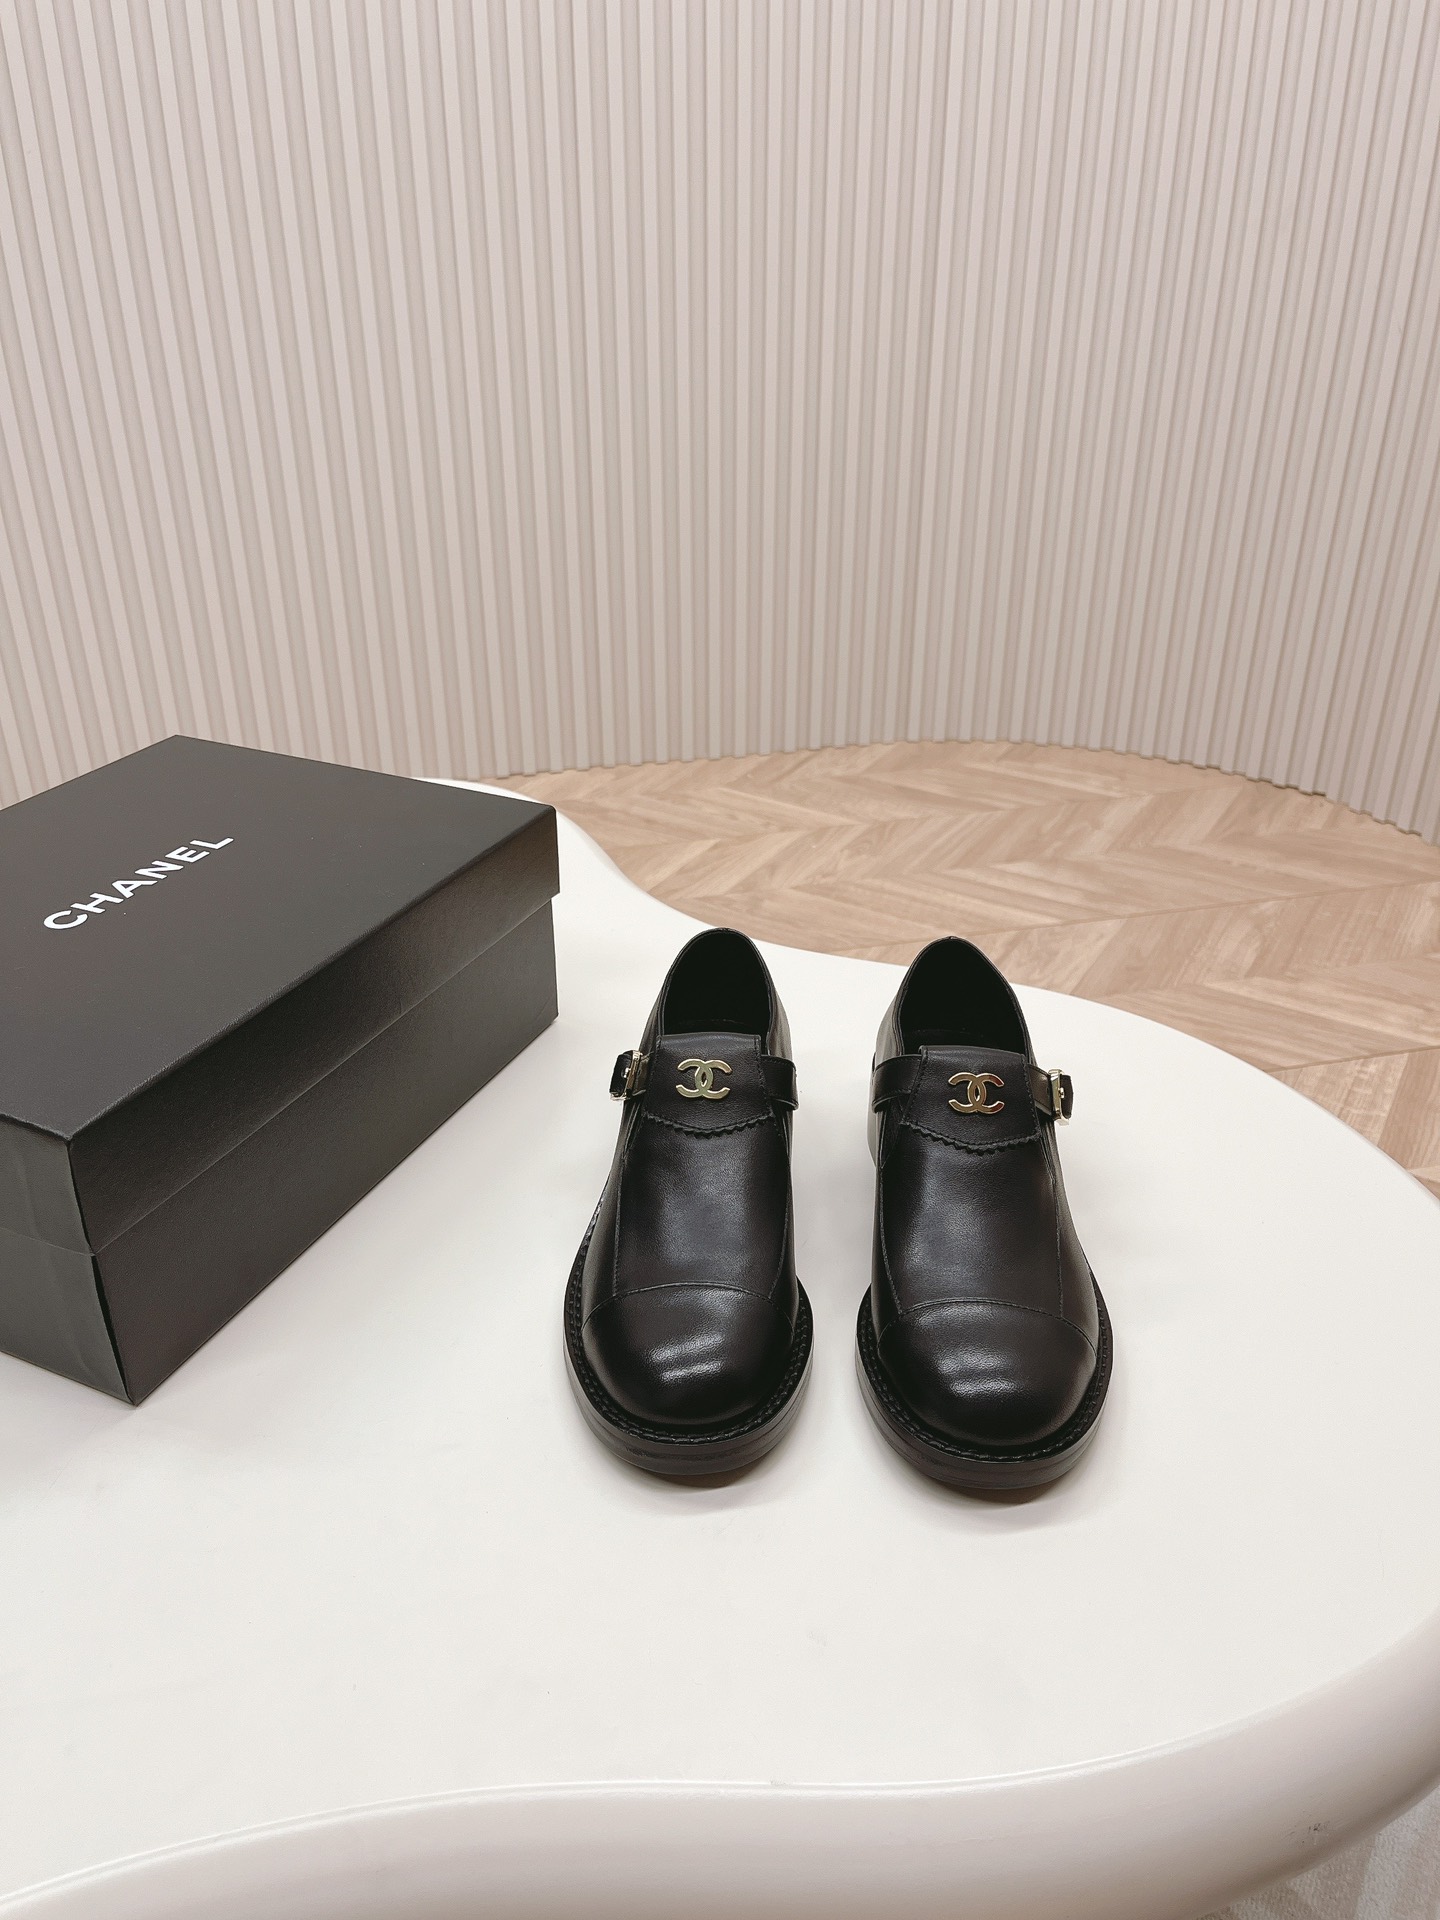 CHANELシャネルの靴Ｎ級品 レザー ファッション ローファーシンプル 厚い靴底 歩きやすい ブラック_1